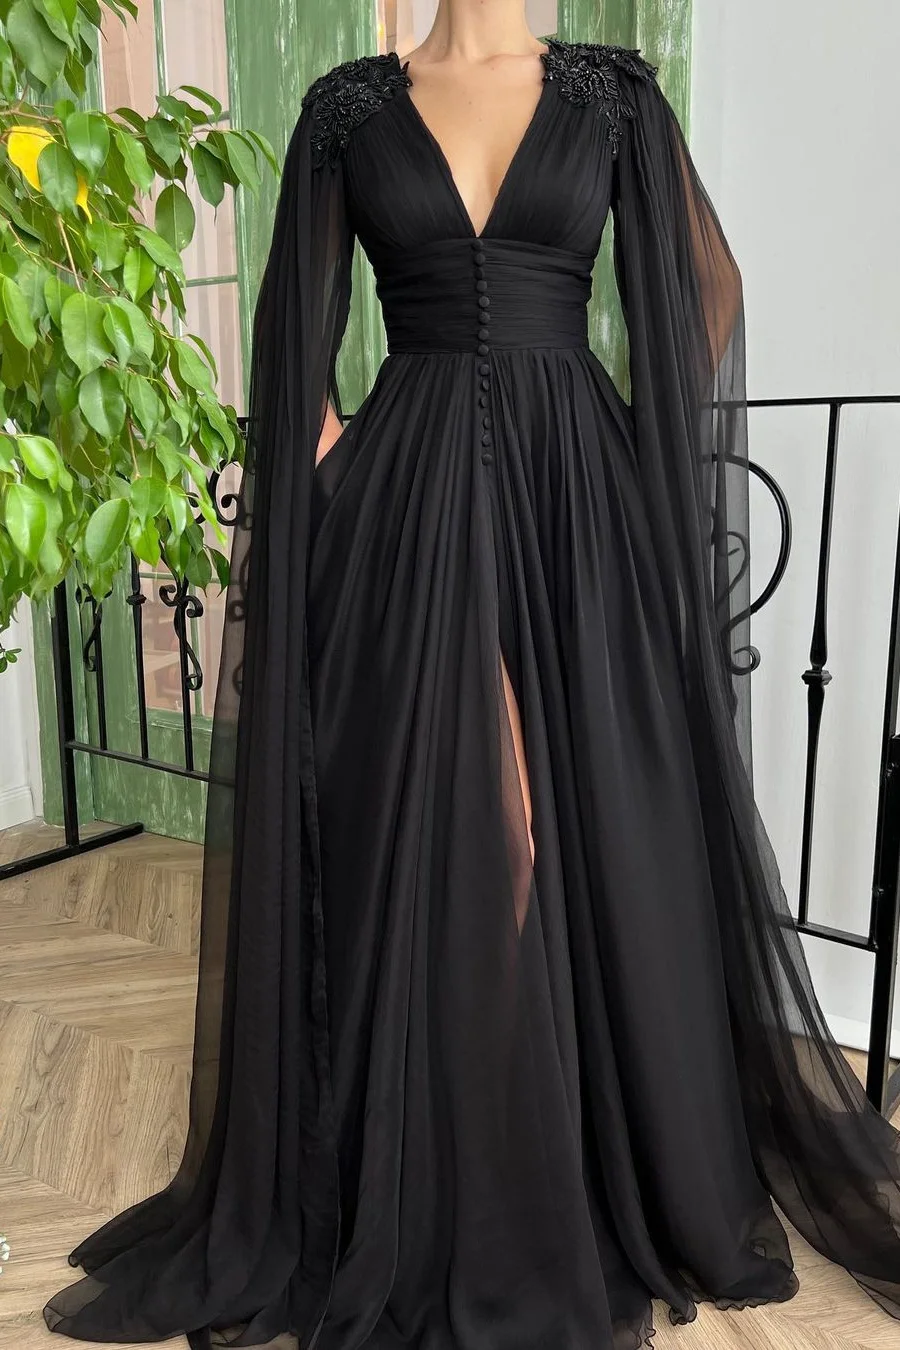 Daisda Elegant Black Deep V Neck Tulle Maxi Cocktail Evening Party Dress Front Slit Ruffle Sleeves